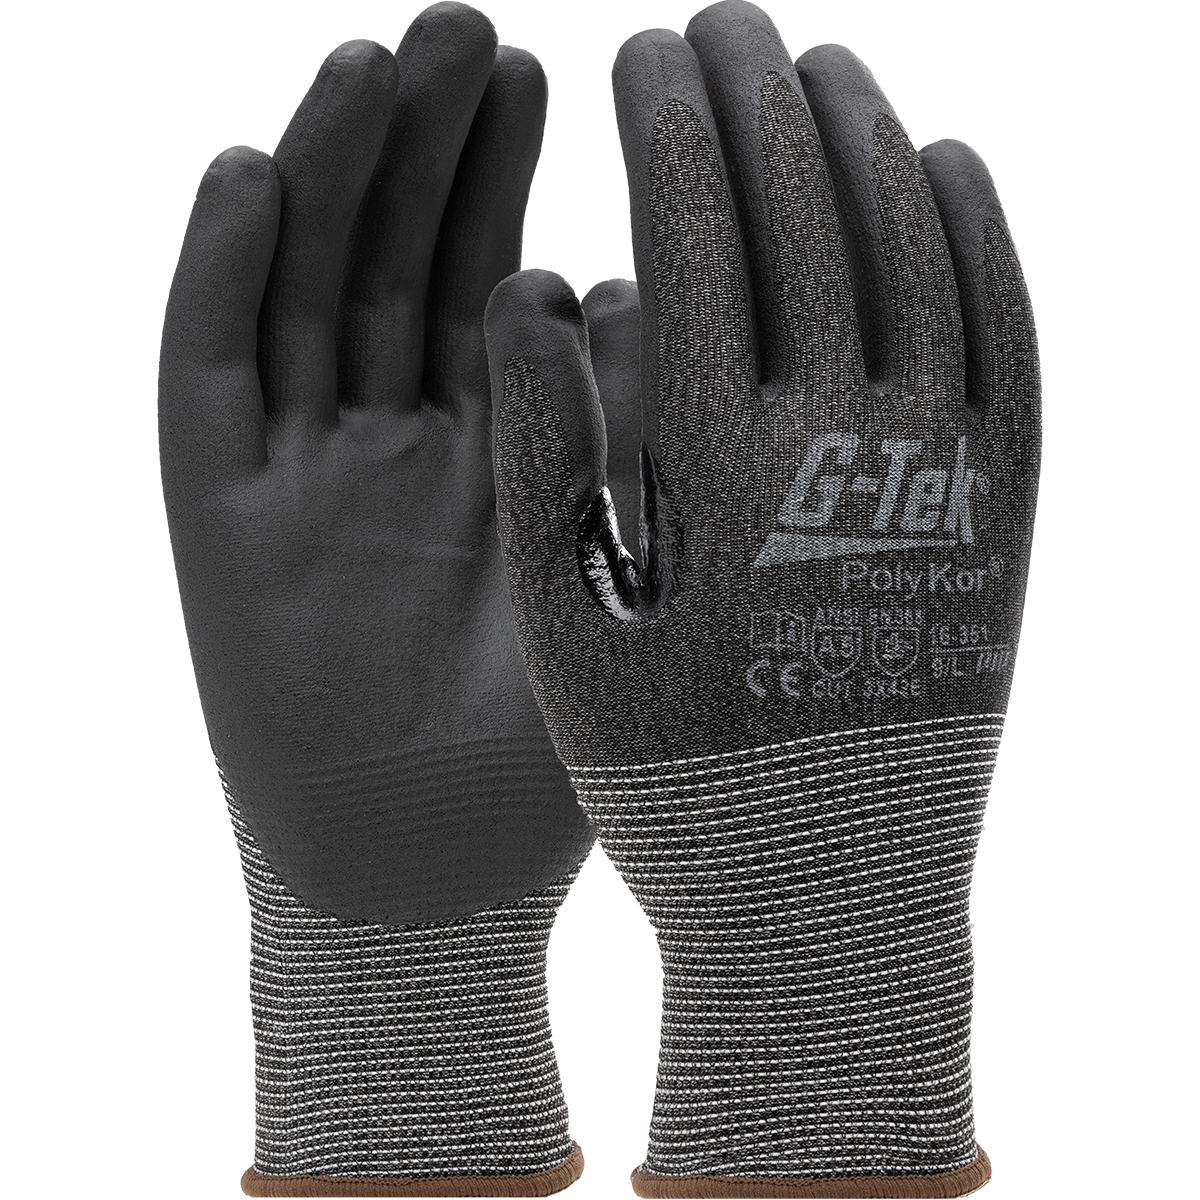 G-TEK POLYKOR 16-351 FOAM NITRILE PALM - Tagged Gloves